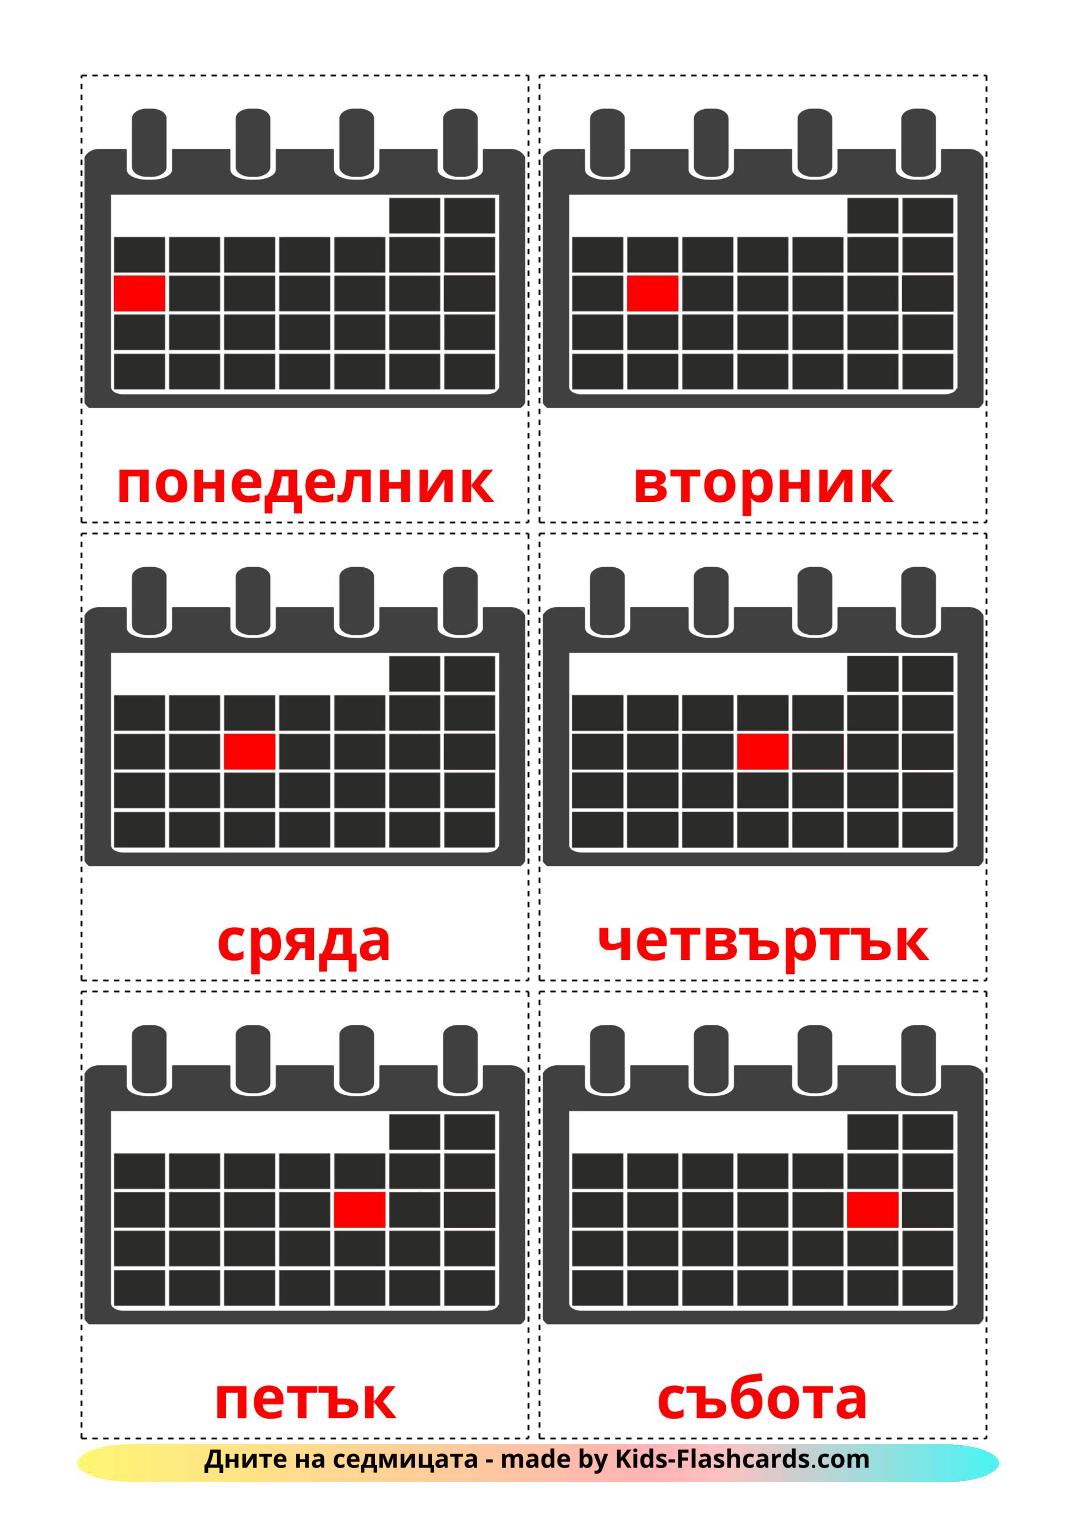 Days of Week - 12 Free Printable bulgarian Flashcards 